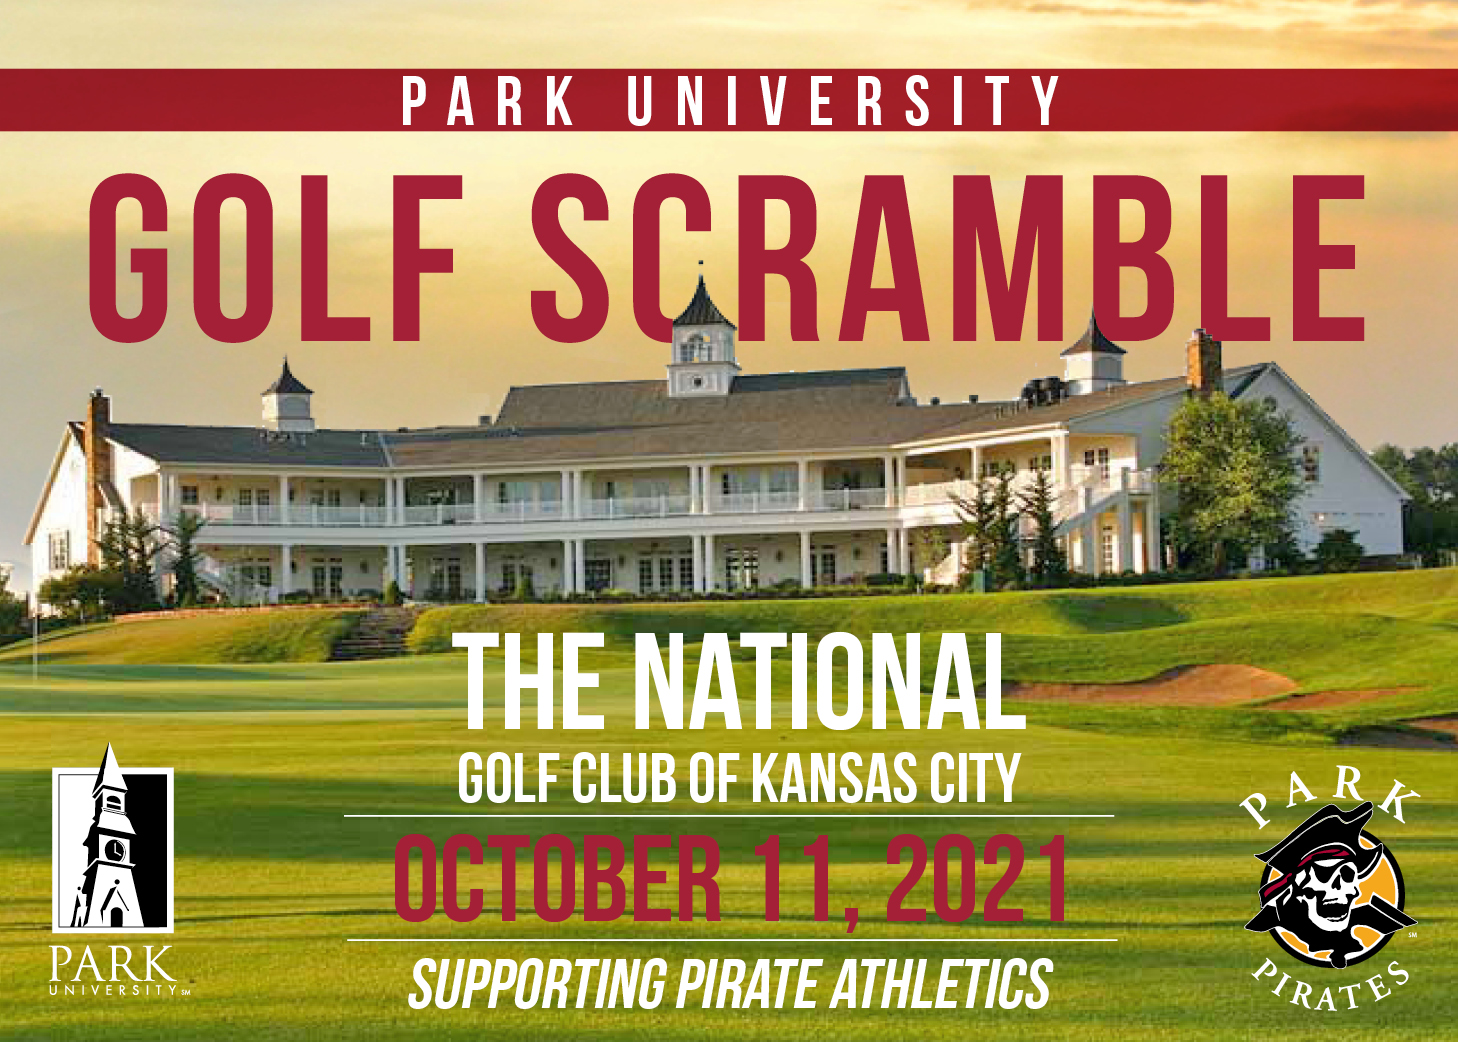 Golf Scramble 2021 Set for Oct. 11 | News | Park University